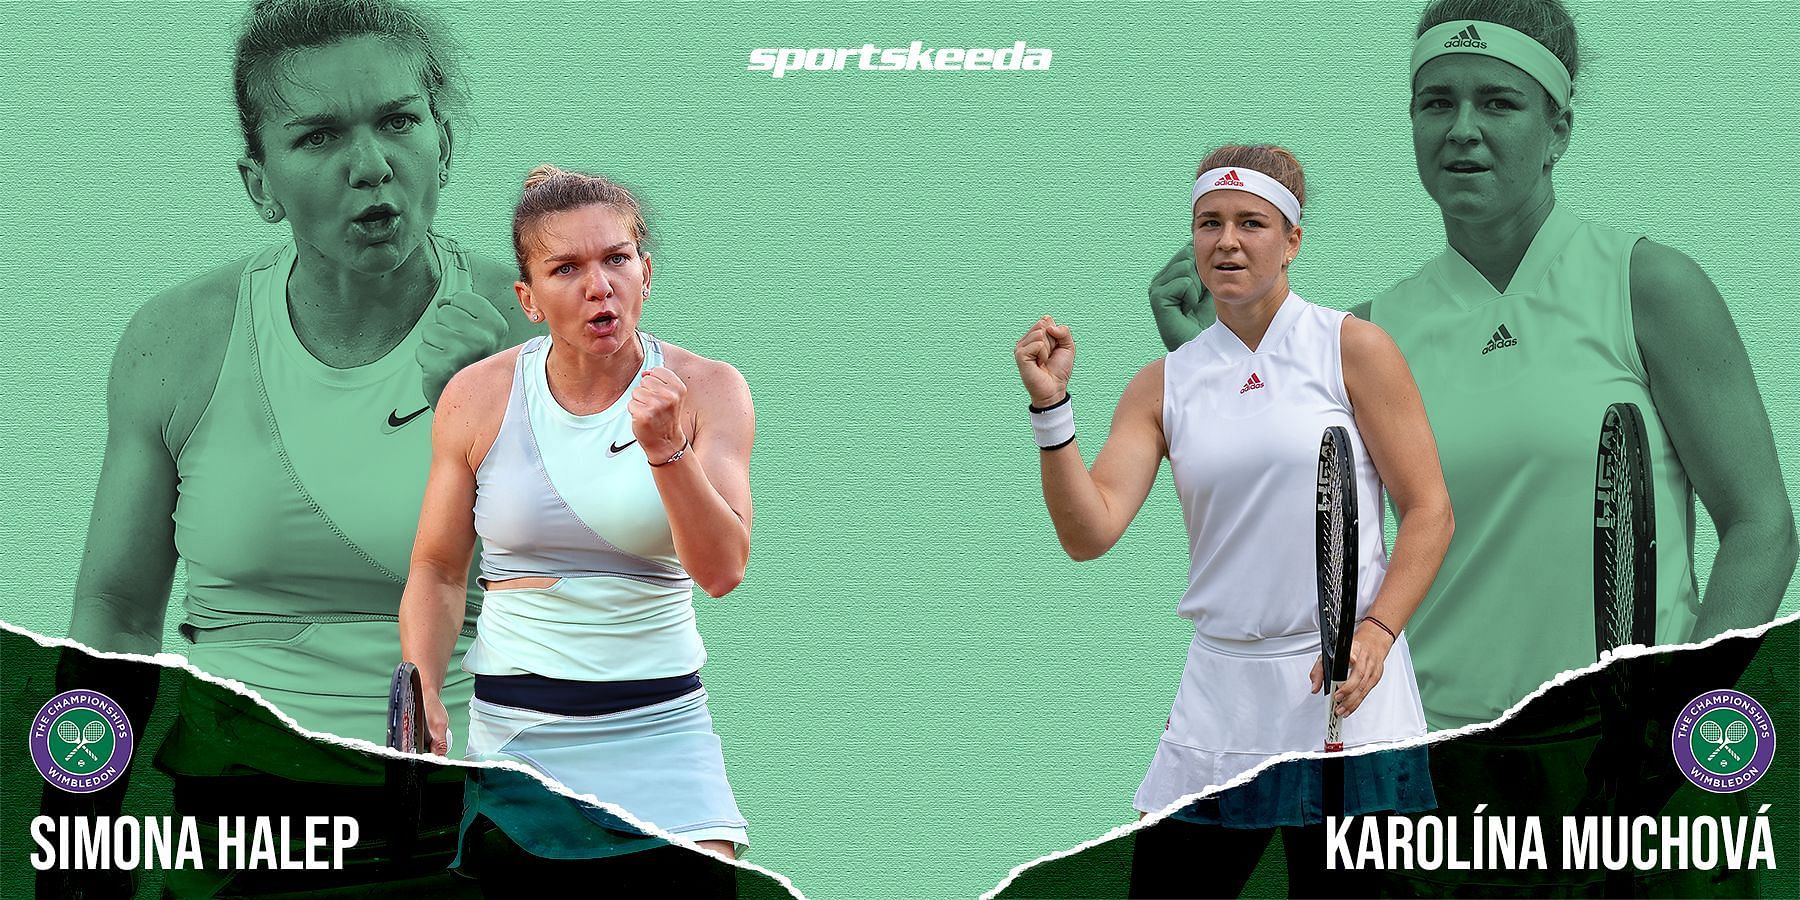 Simona Halep takes on Karolina Muchova in the first round of Wimbledon